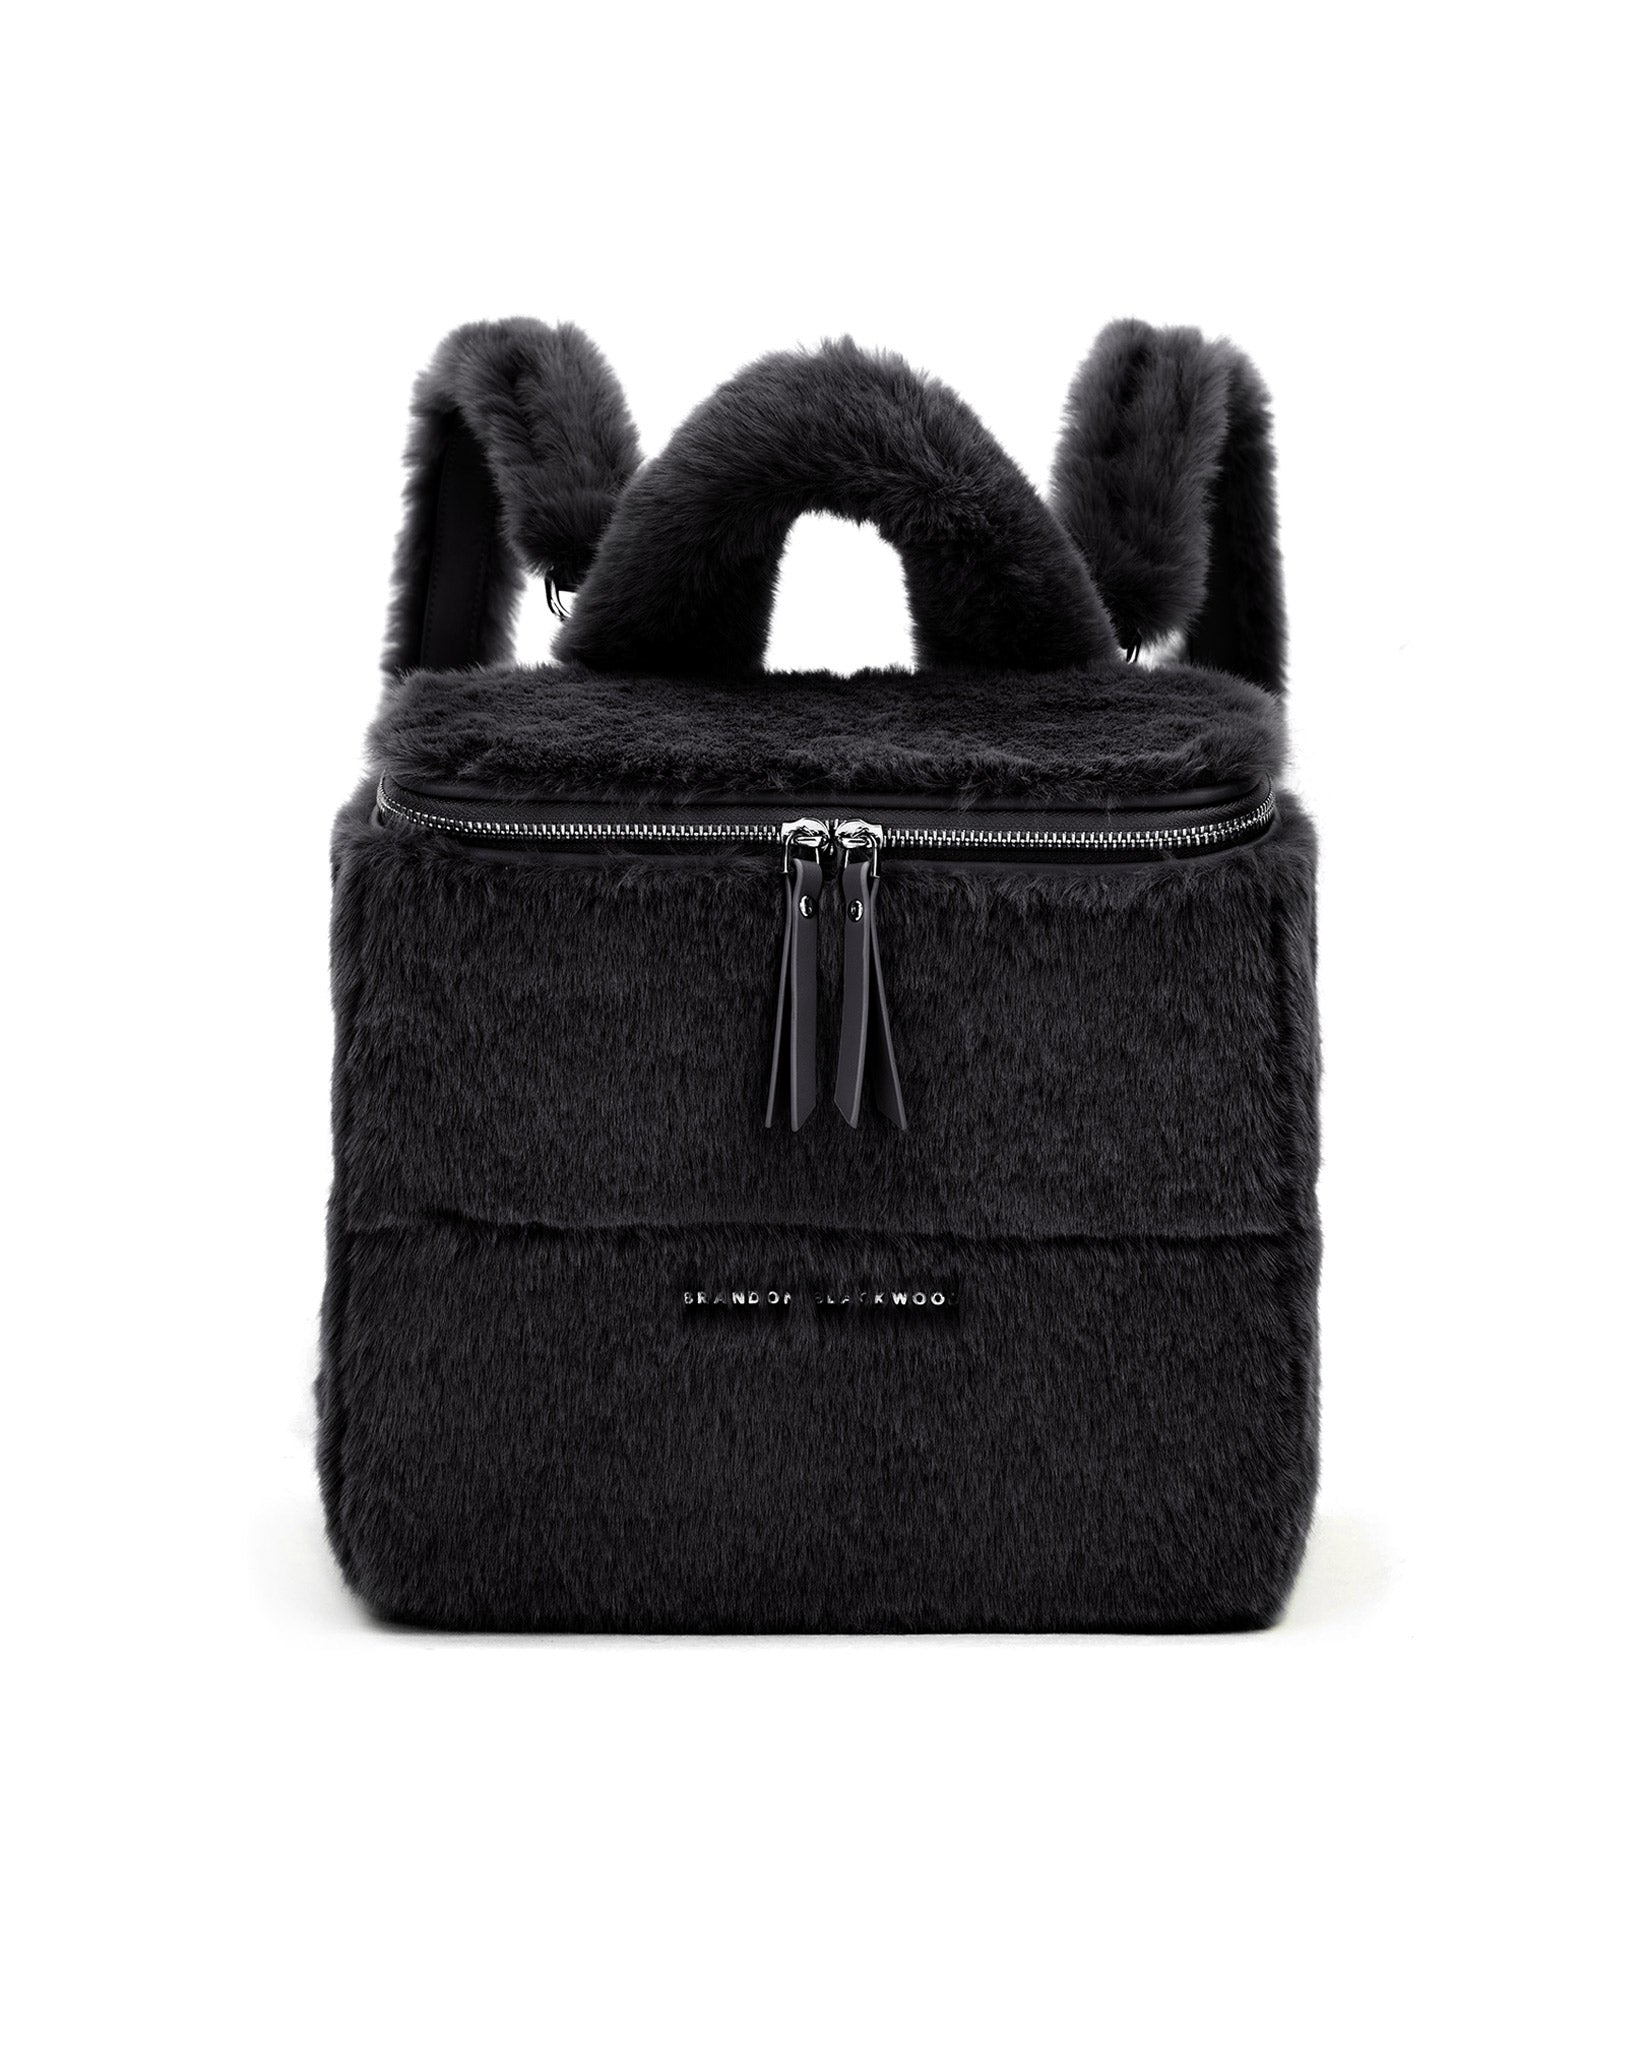 Brandon Blackwood New York - Portmore Backpack - Black faux mink